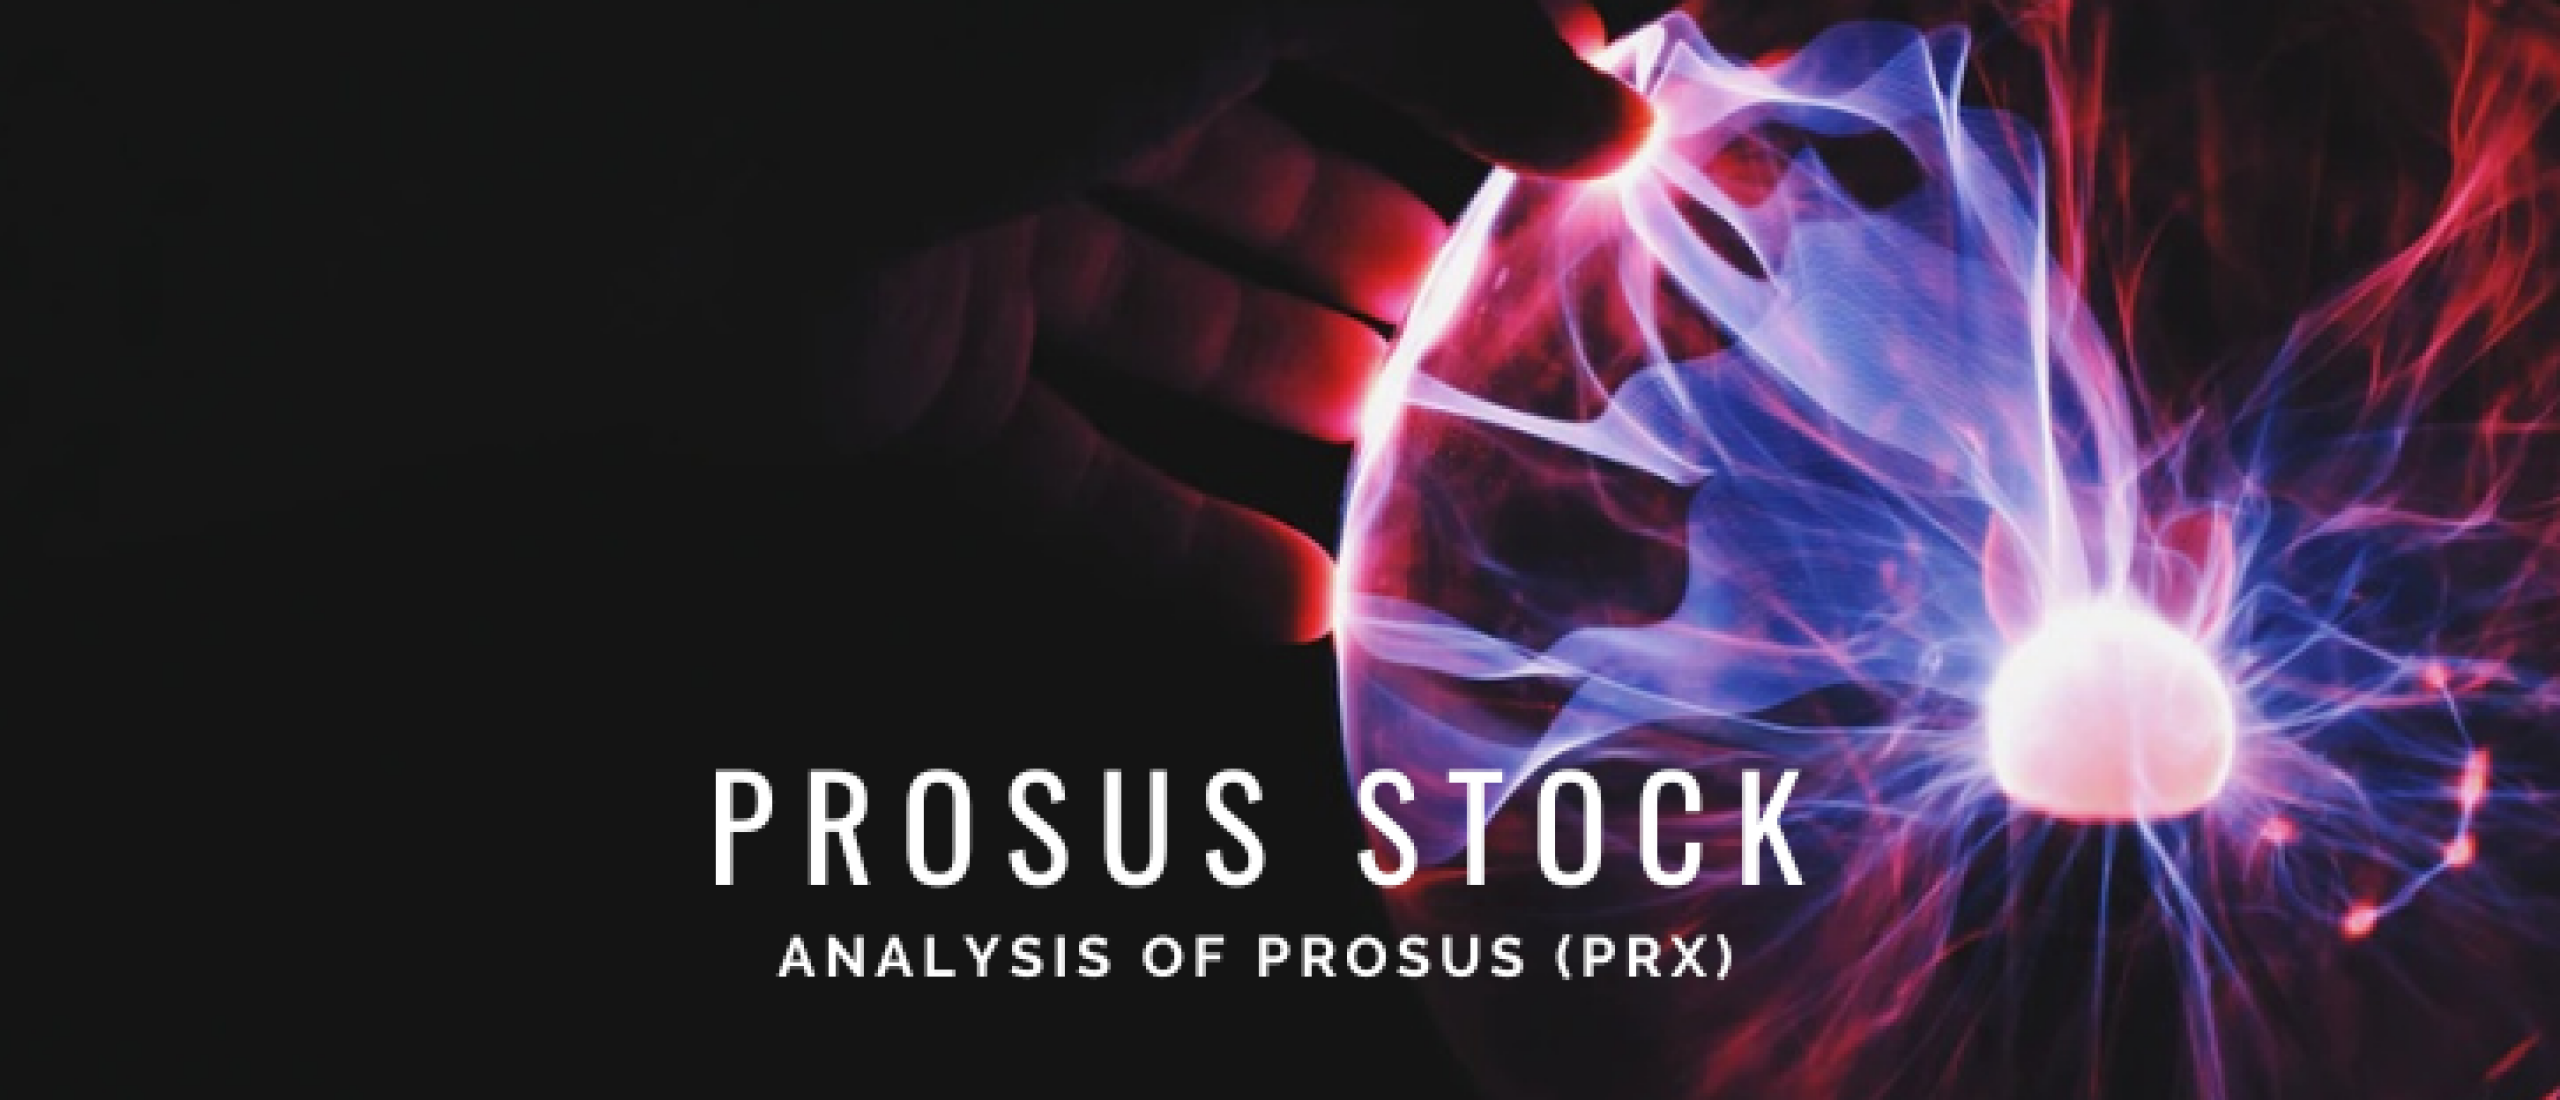 Prosus (PRX) Stock Analysis: Price Target, Risks, Strategy & More